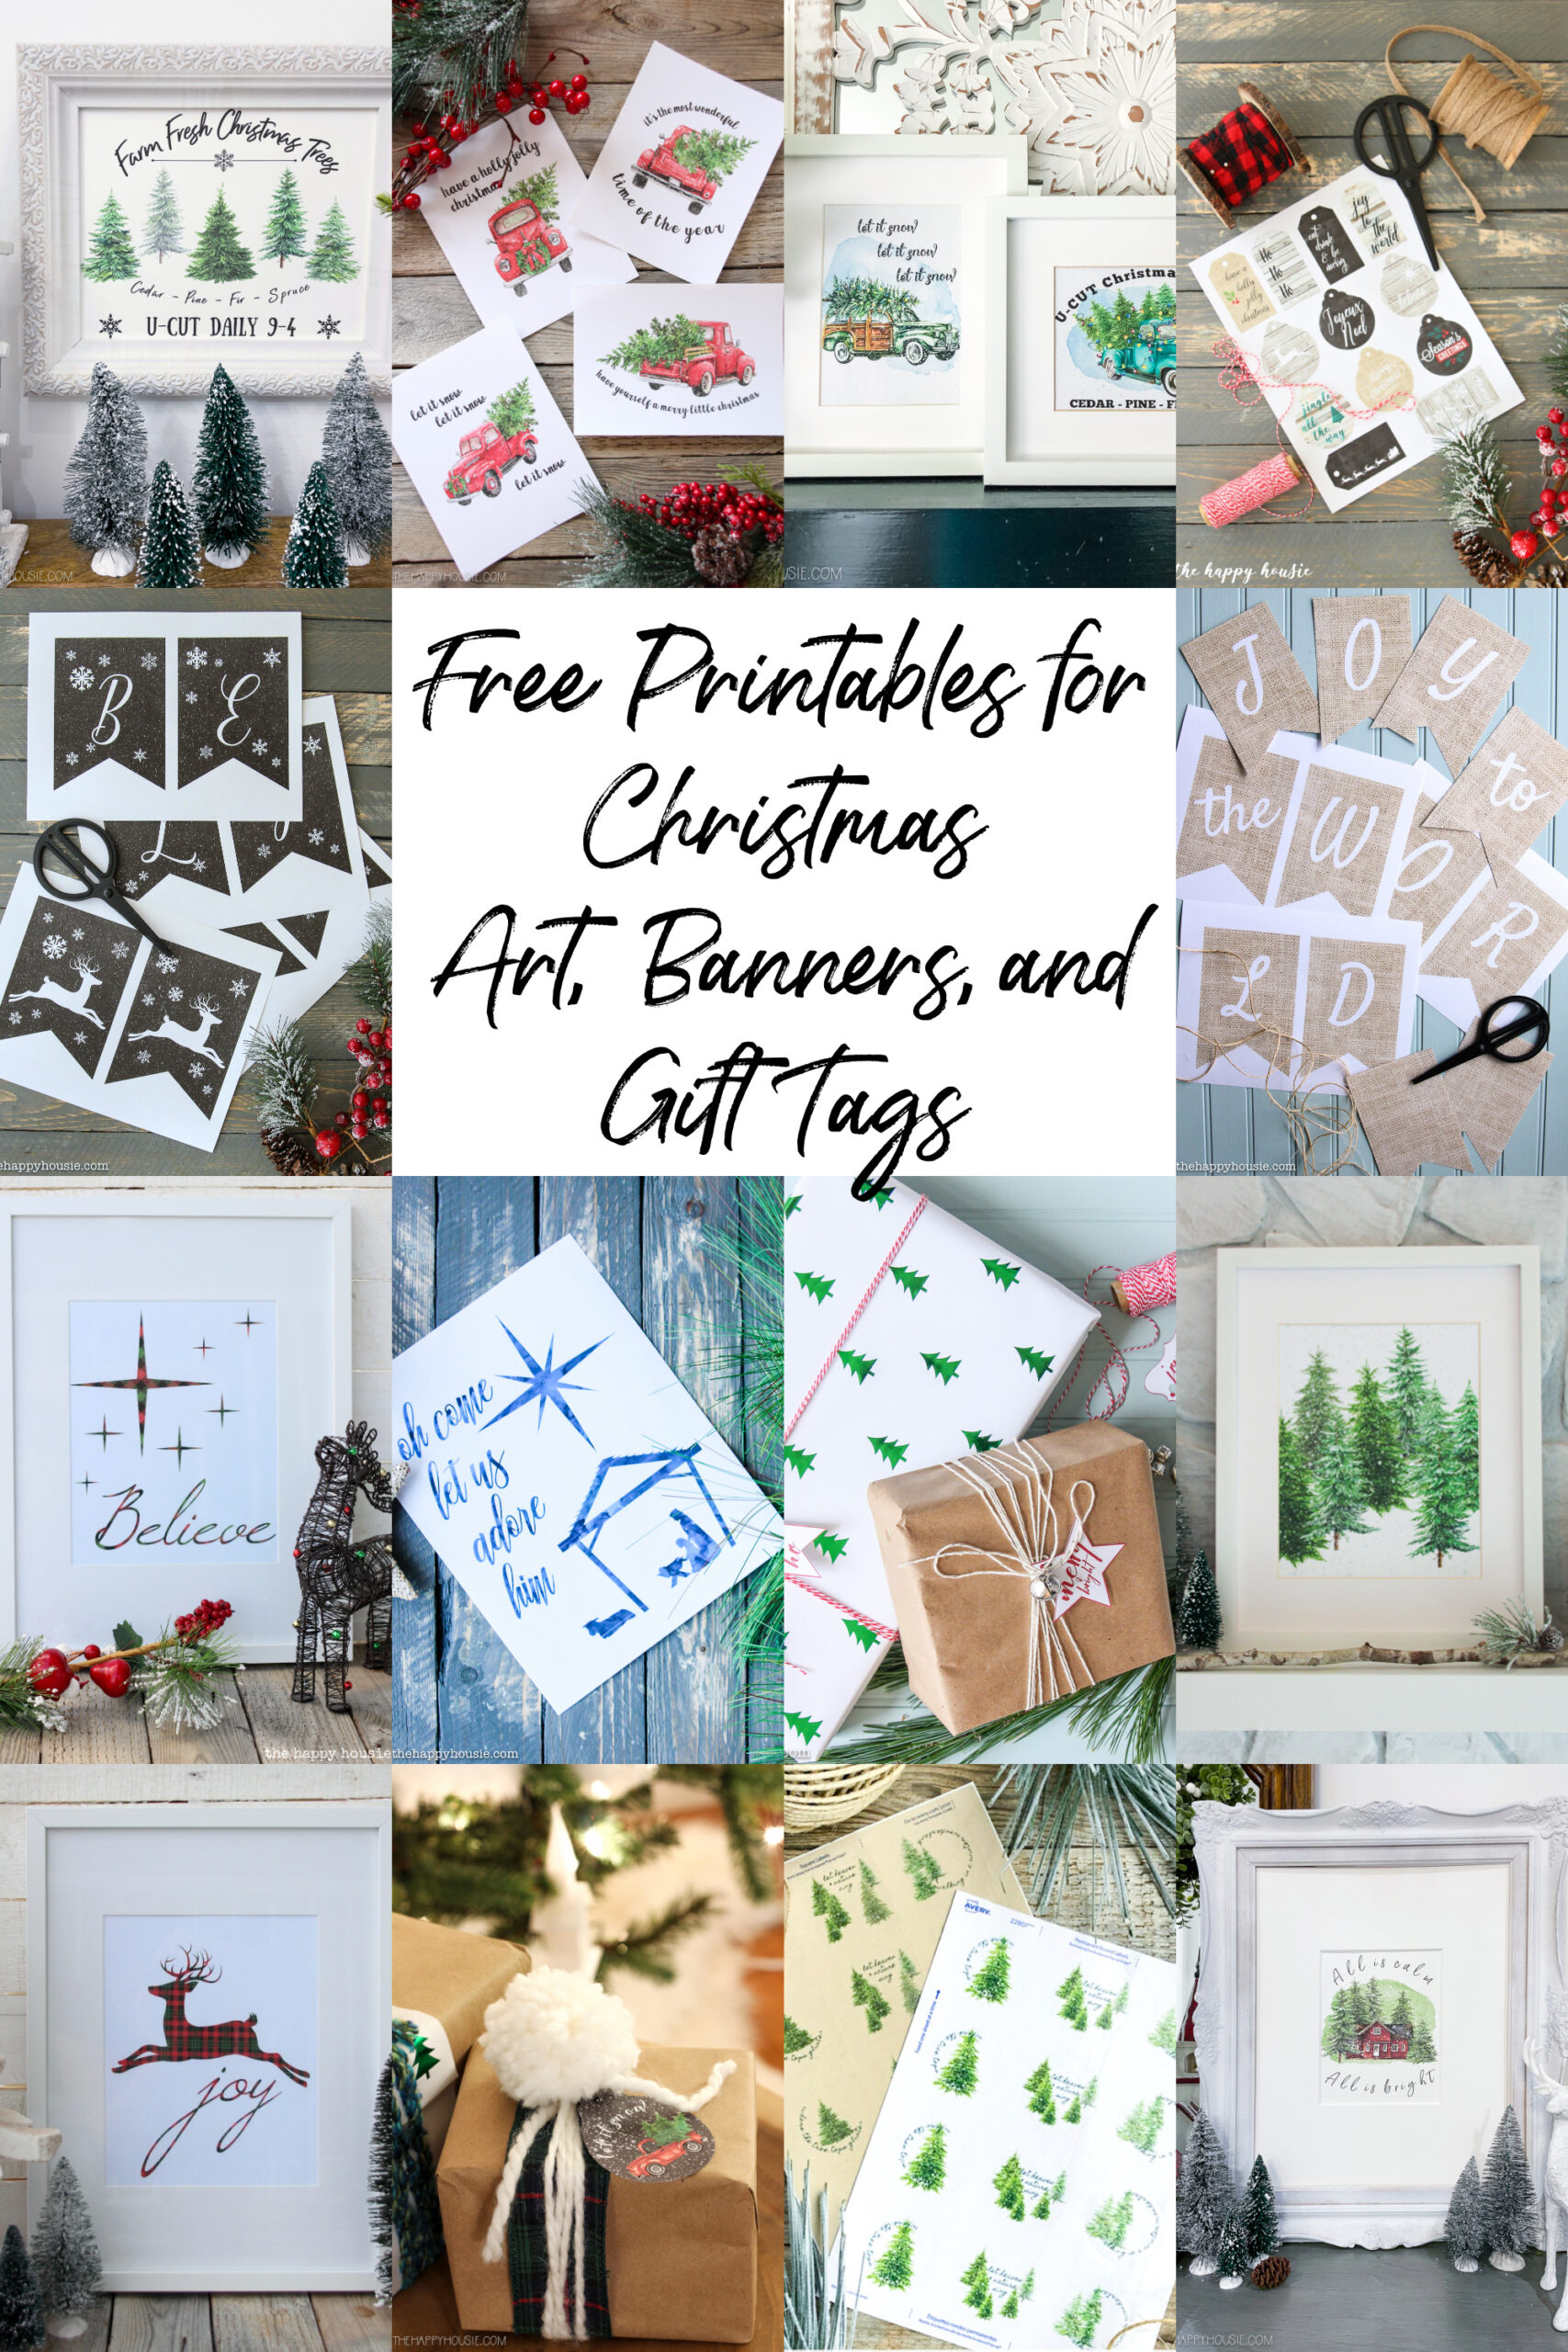 Free Printables For Christmas Art, Banners, and Gift Tags.